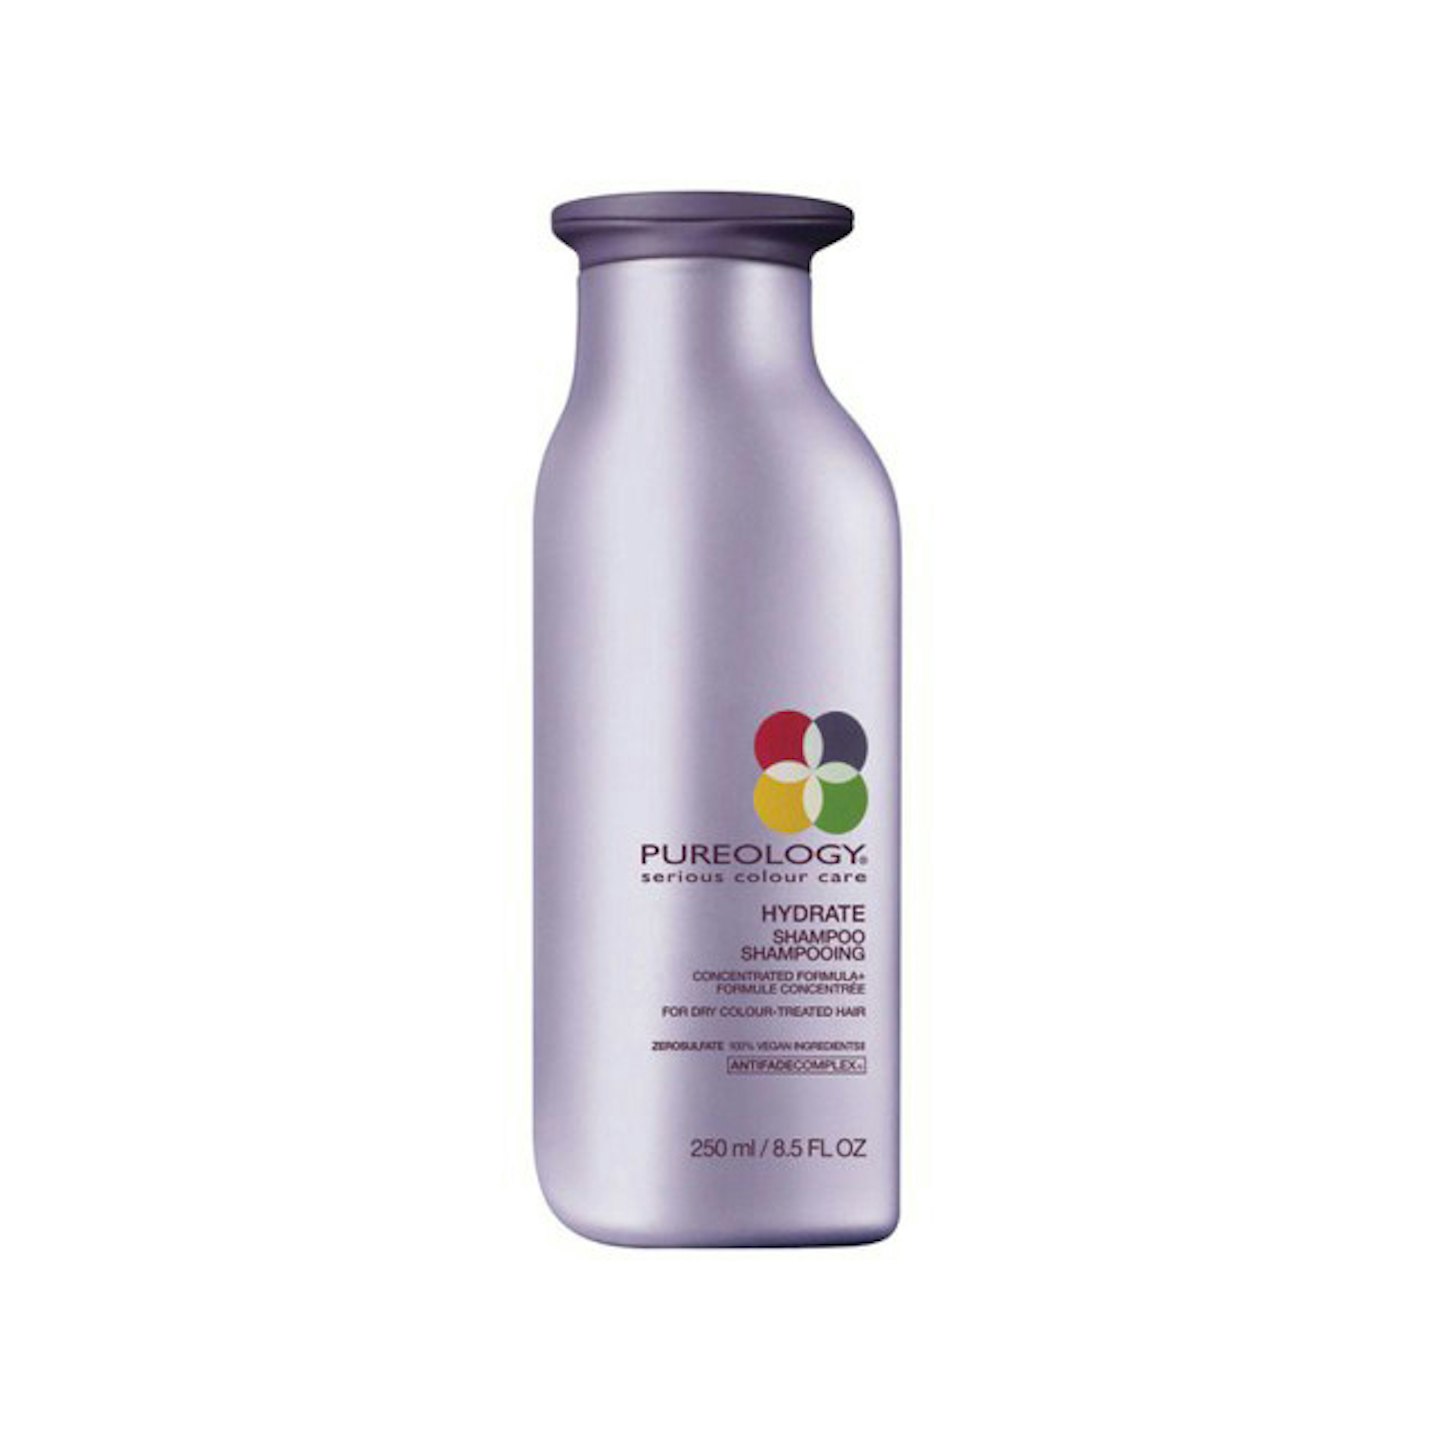 Pureology Hydrate Colour Care Shampoo, £19.95